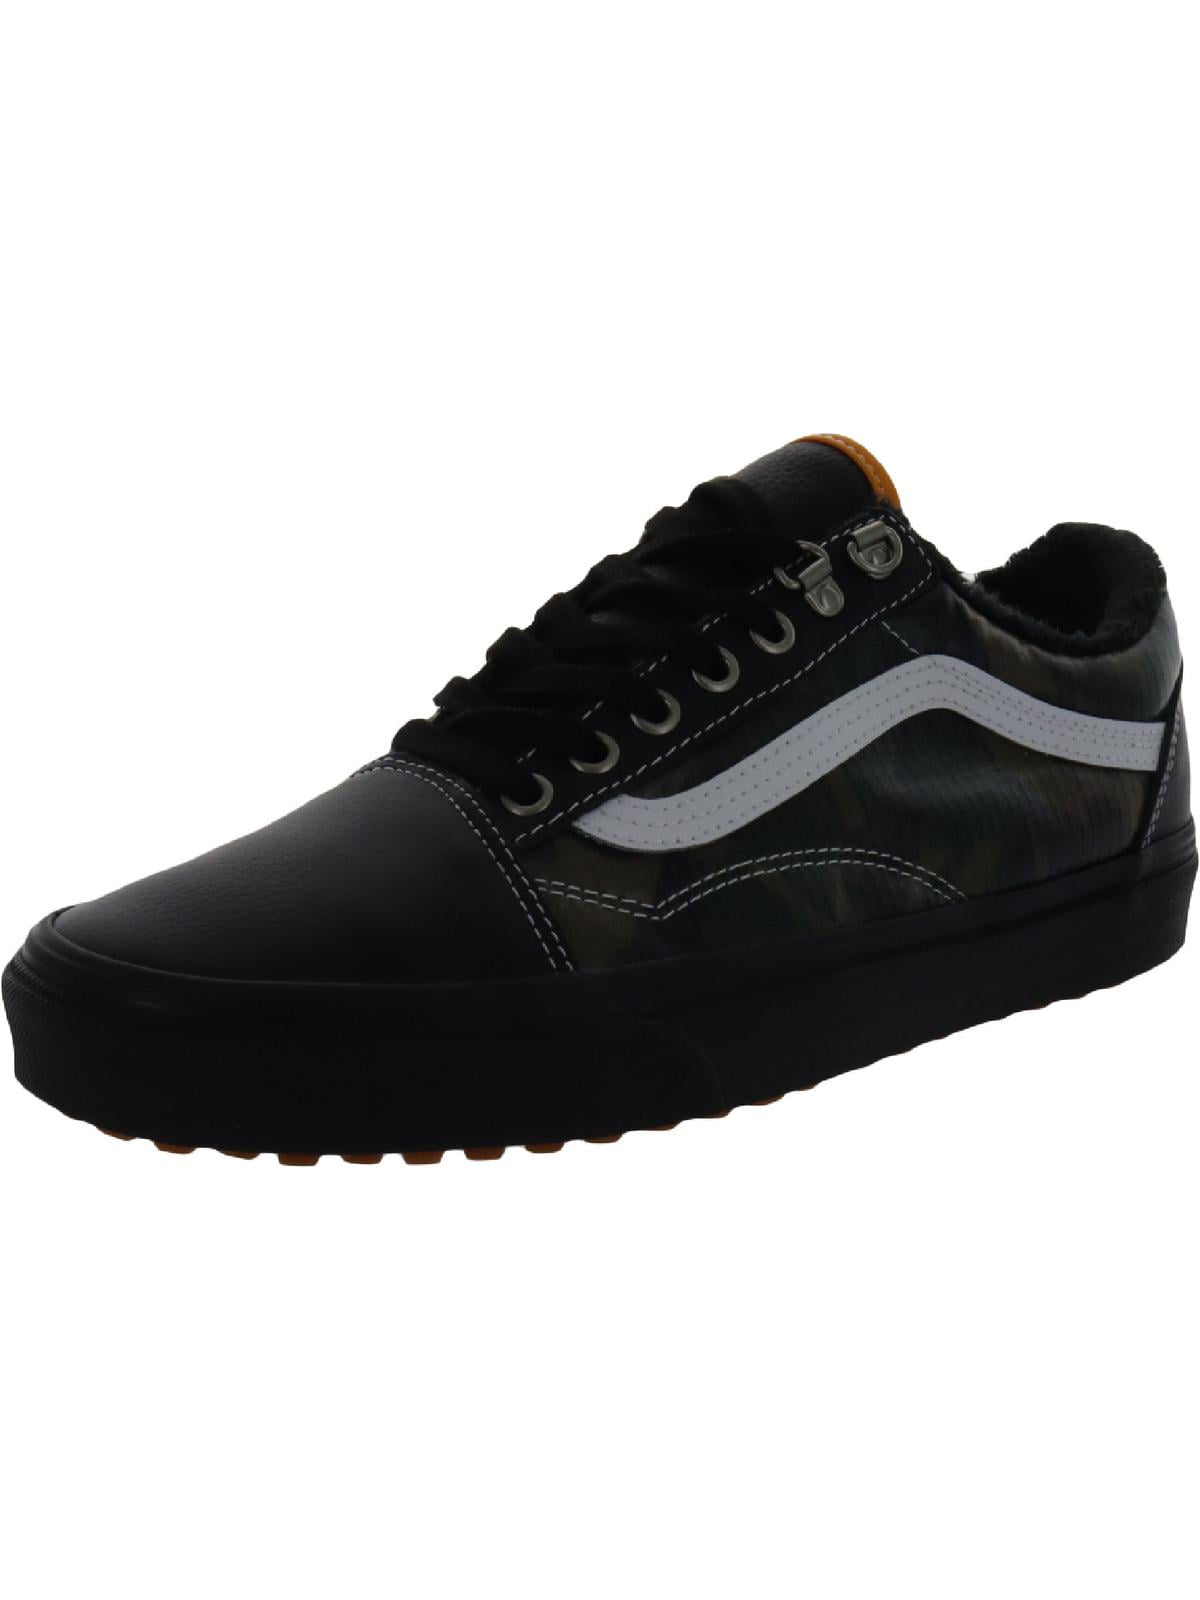 Vans Mens Old Mte Leather and Training Shoes Black 8.5 Medium (D) - Walmart.com